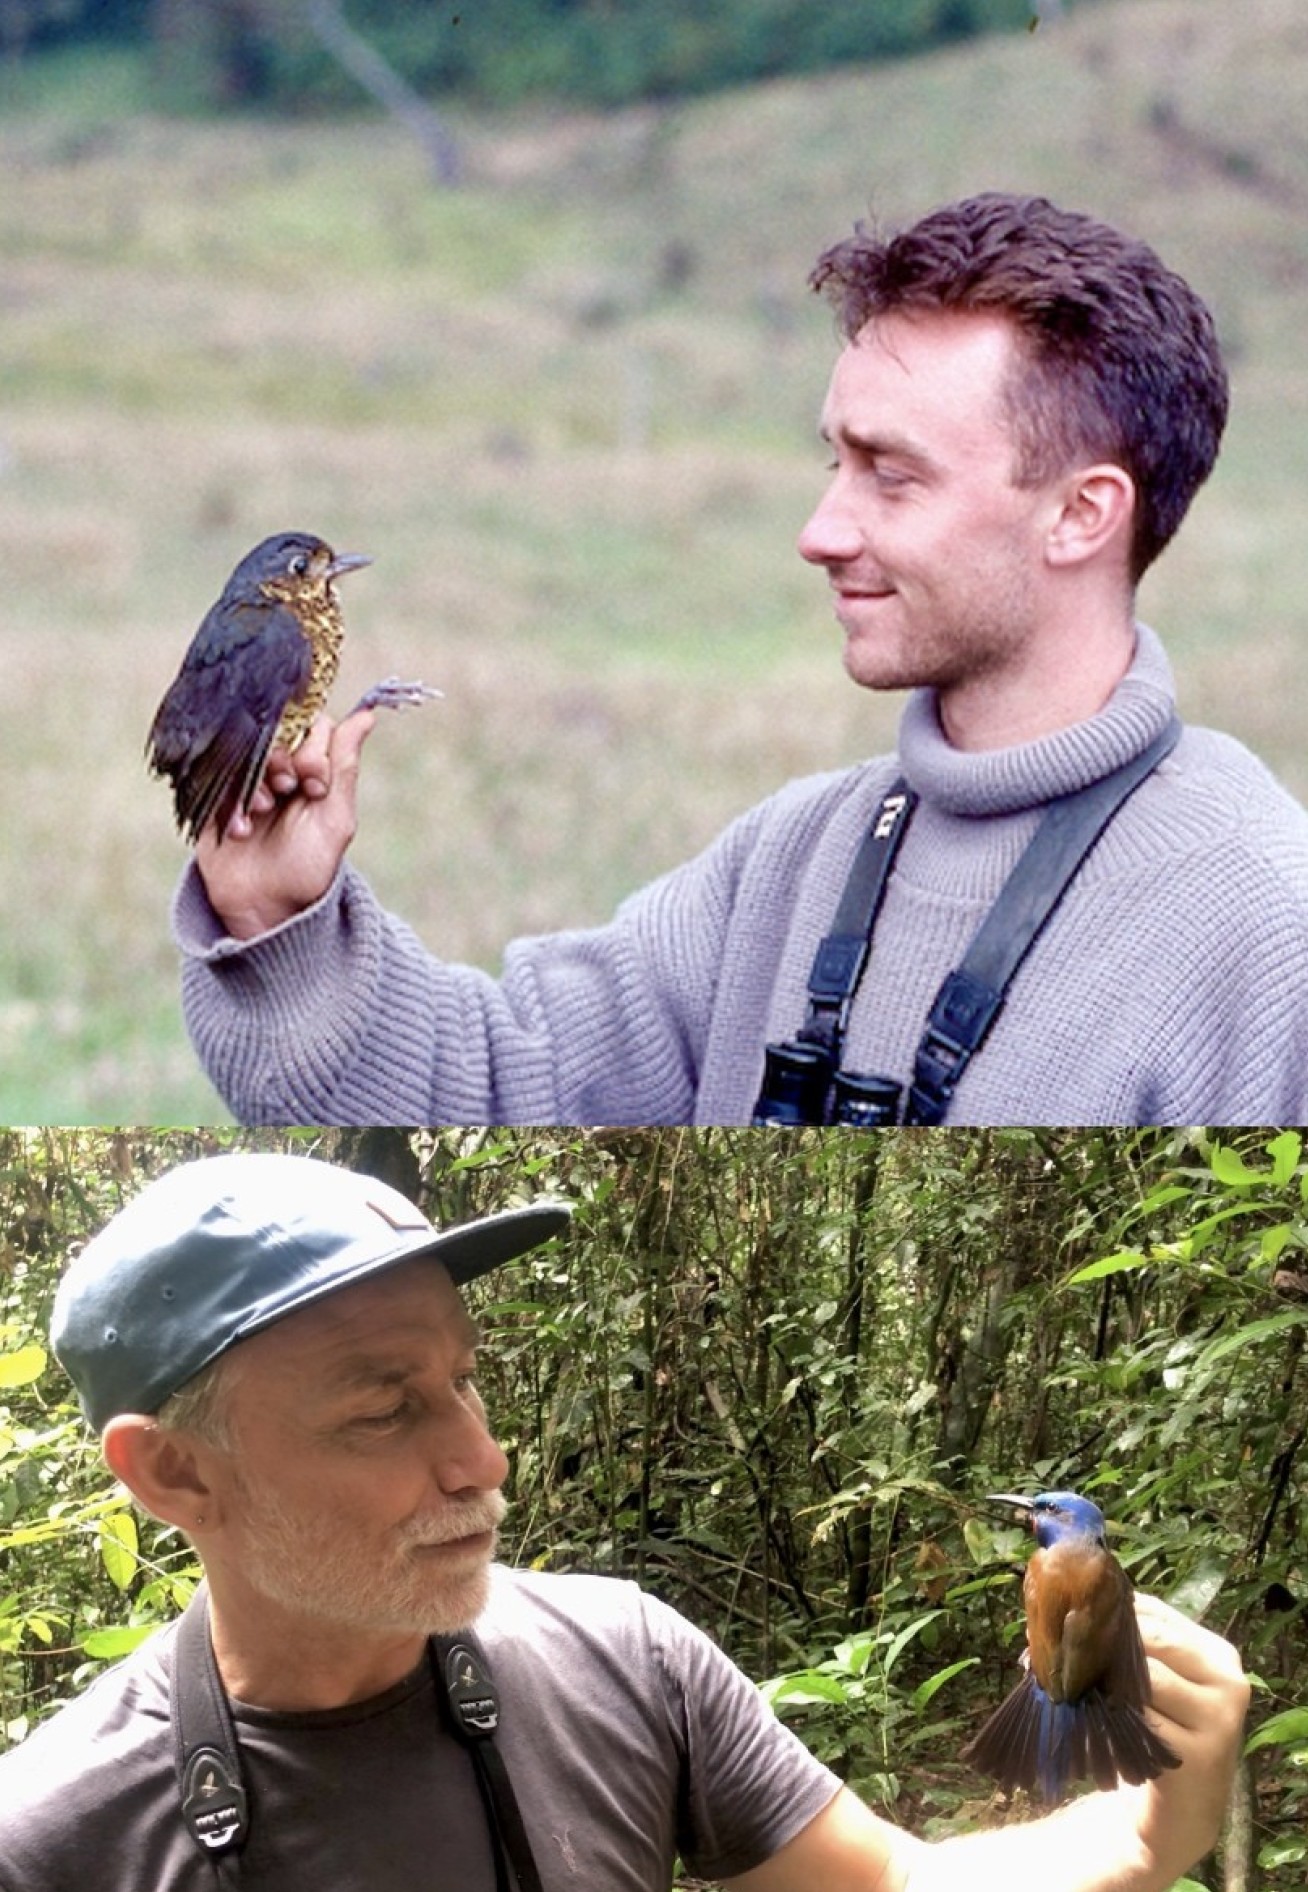 Two photos of the same man holding a bird